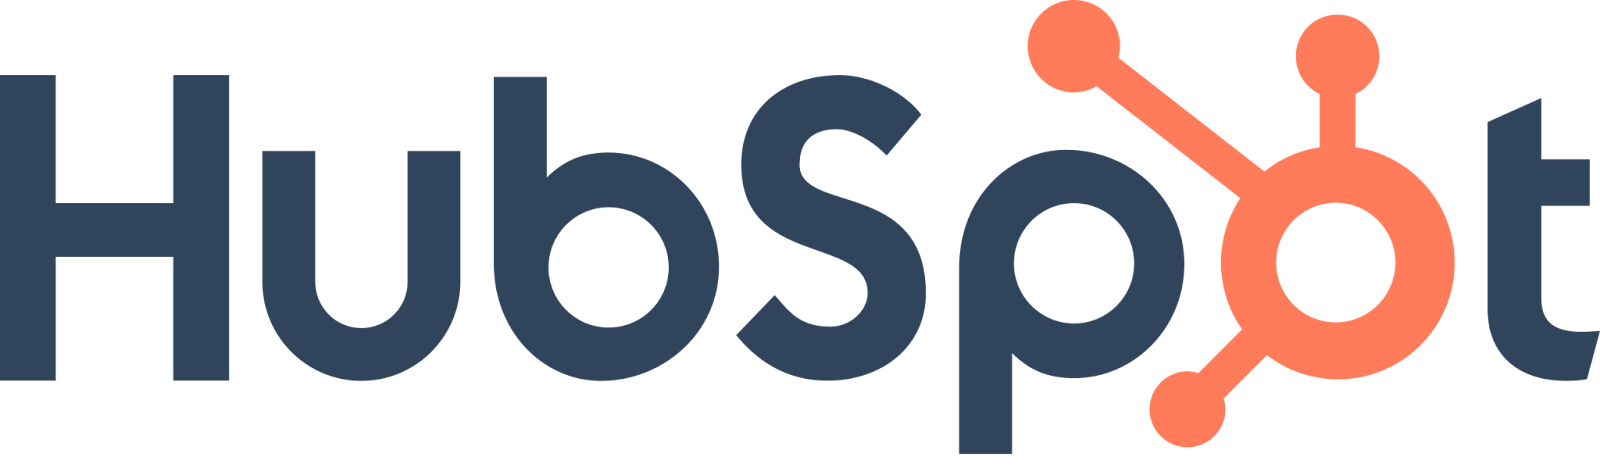 hubspot's logo